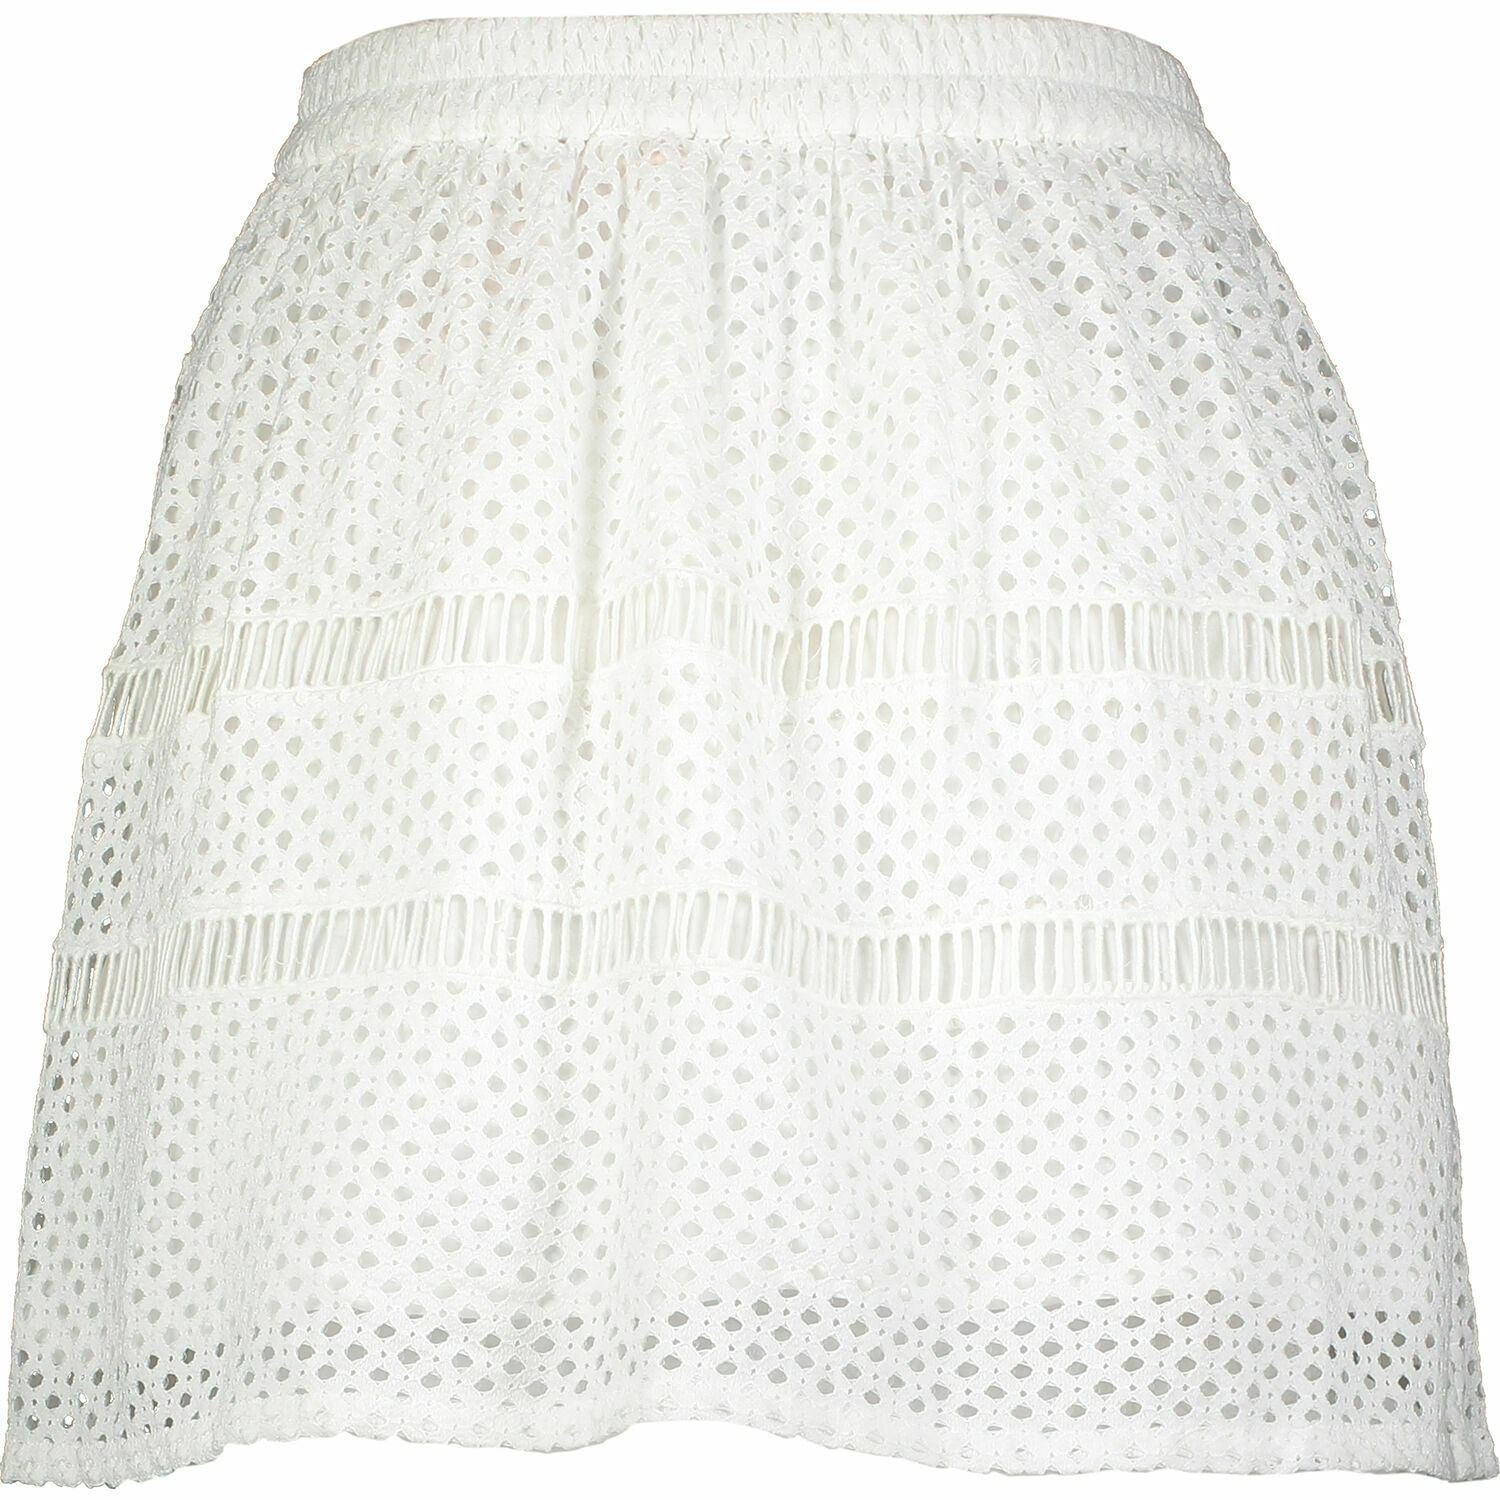 SUPERDRY Women's Geo Lace Mix Skater Skirt, Optic White, size S / UK 10